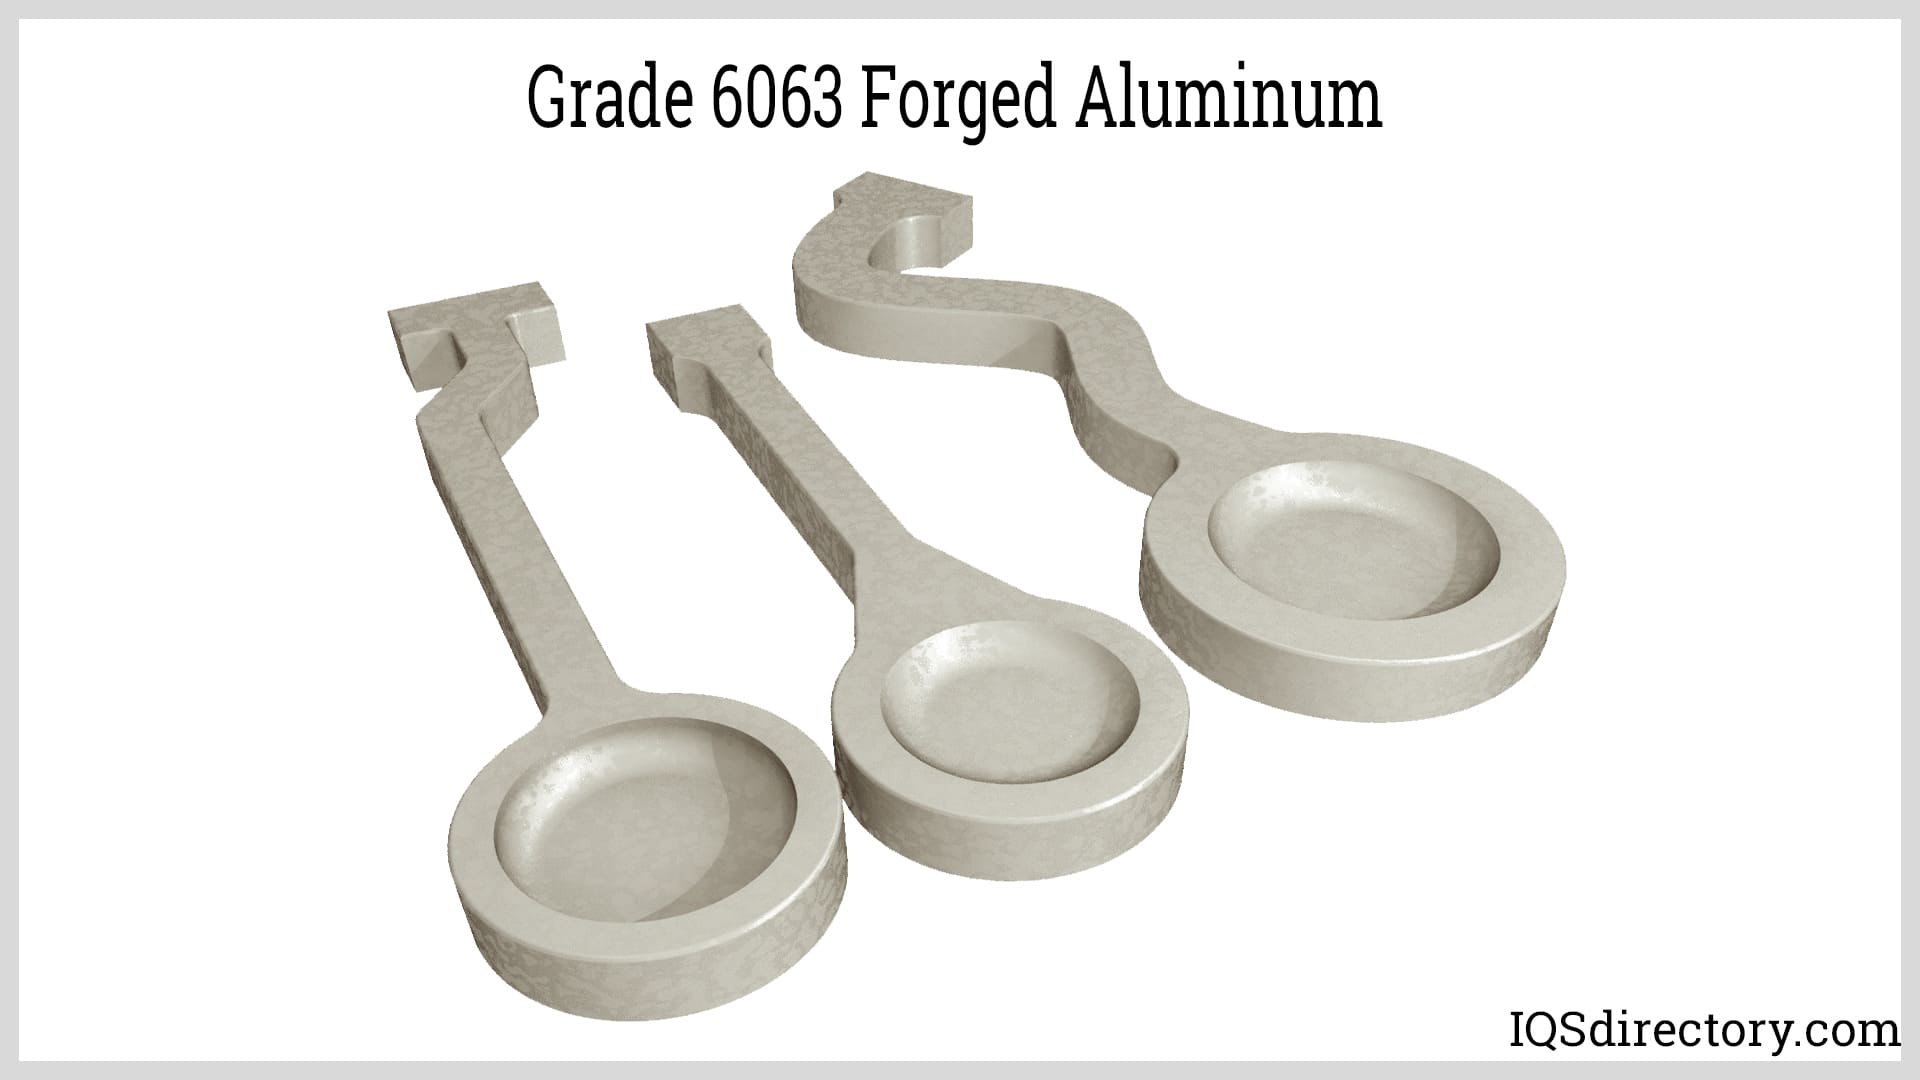 Grade 6063 Forged Aluminum